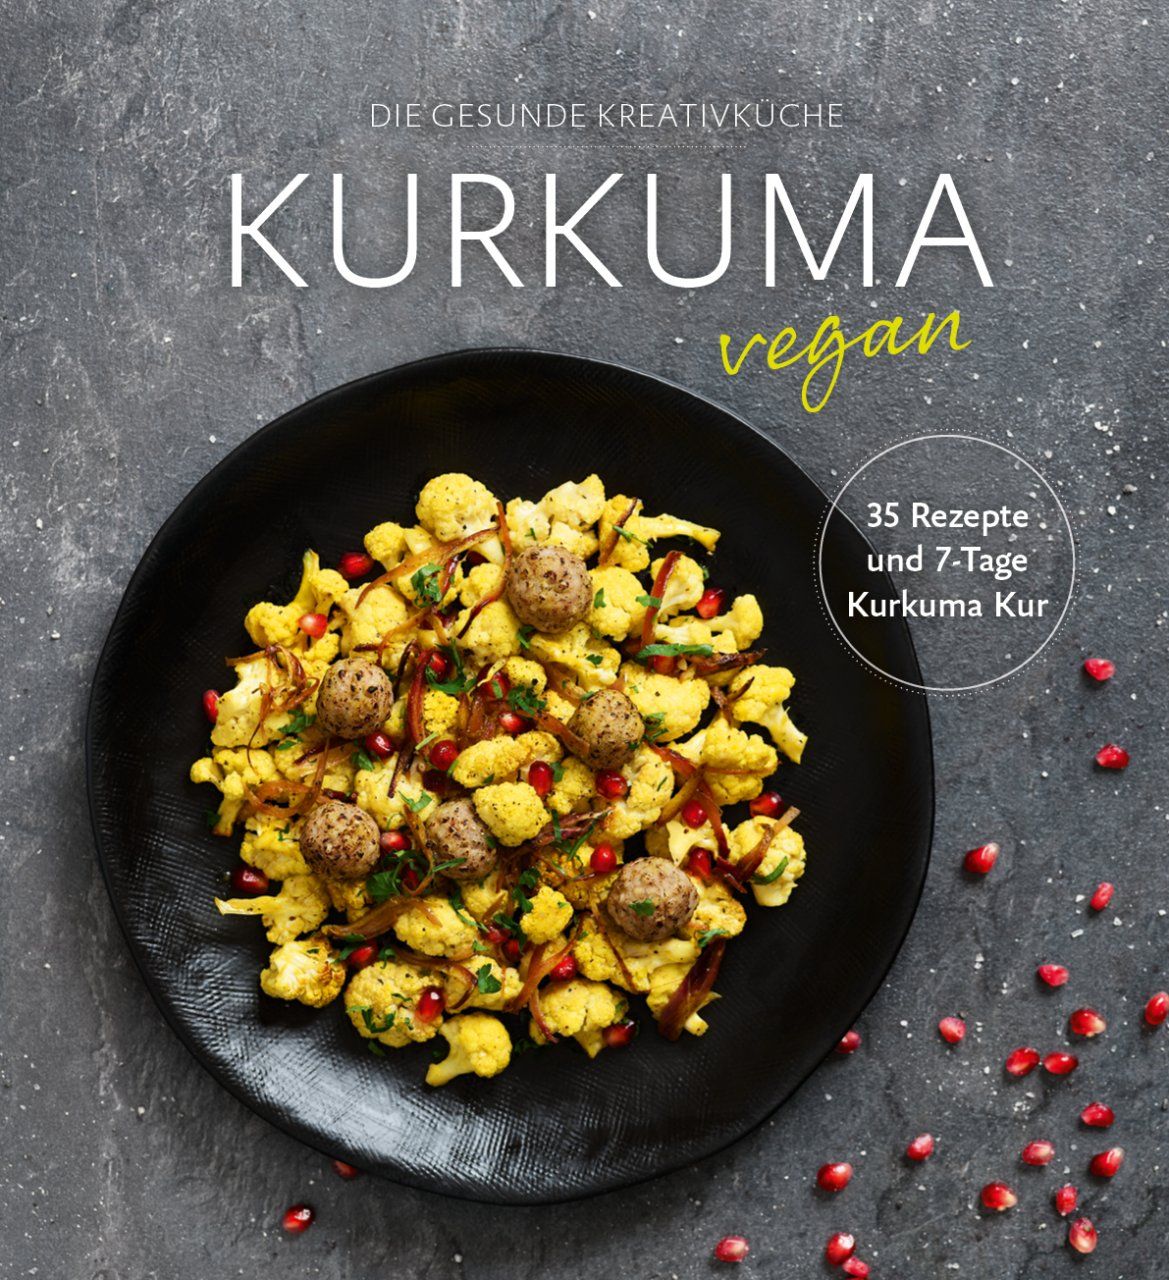 Zentrum der Gesundheit - Das Kurkuma-Kochbuch